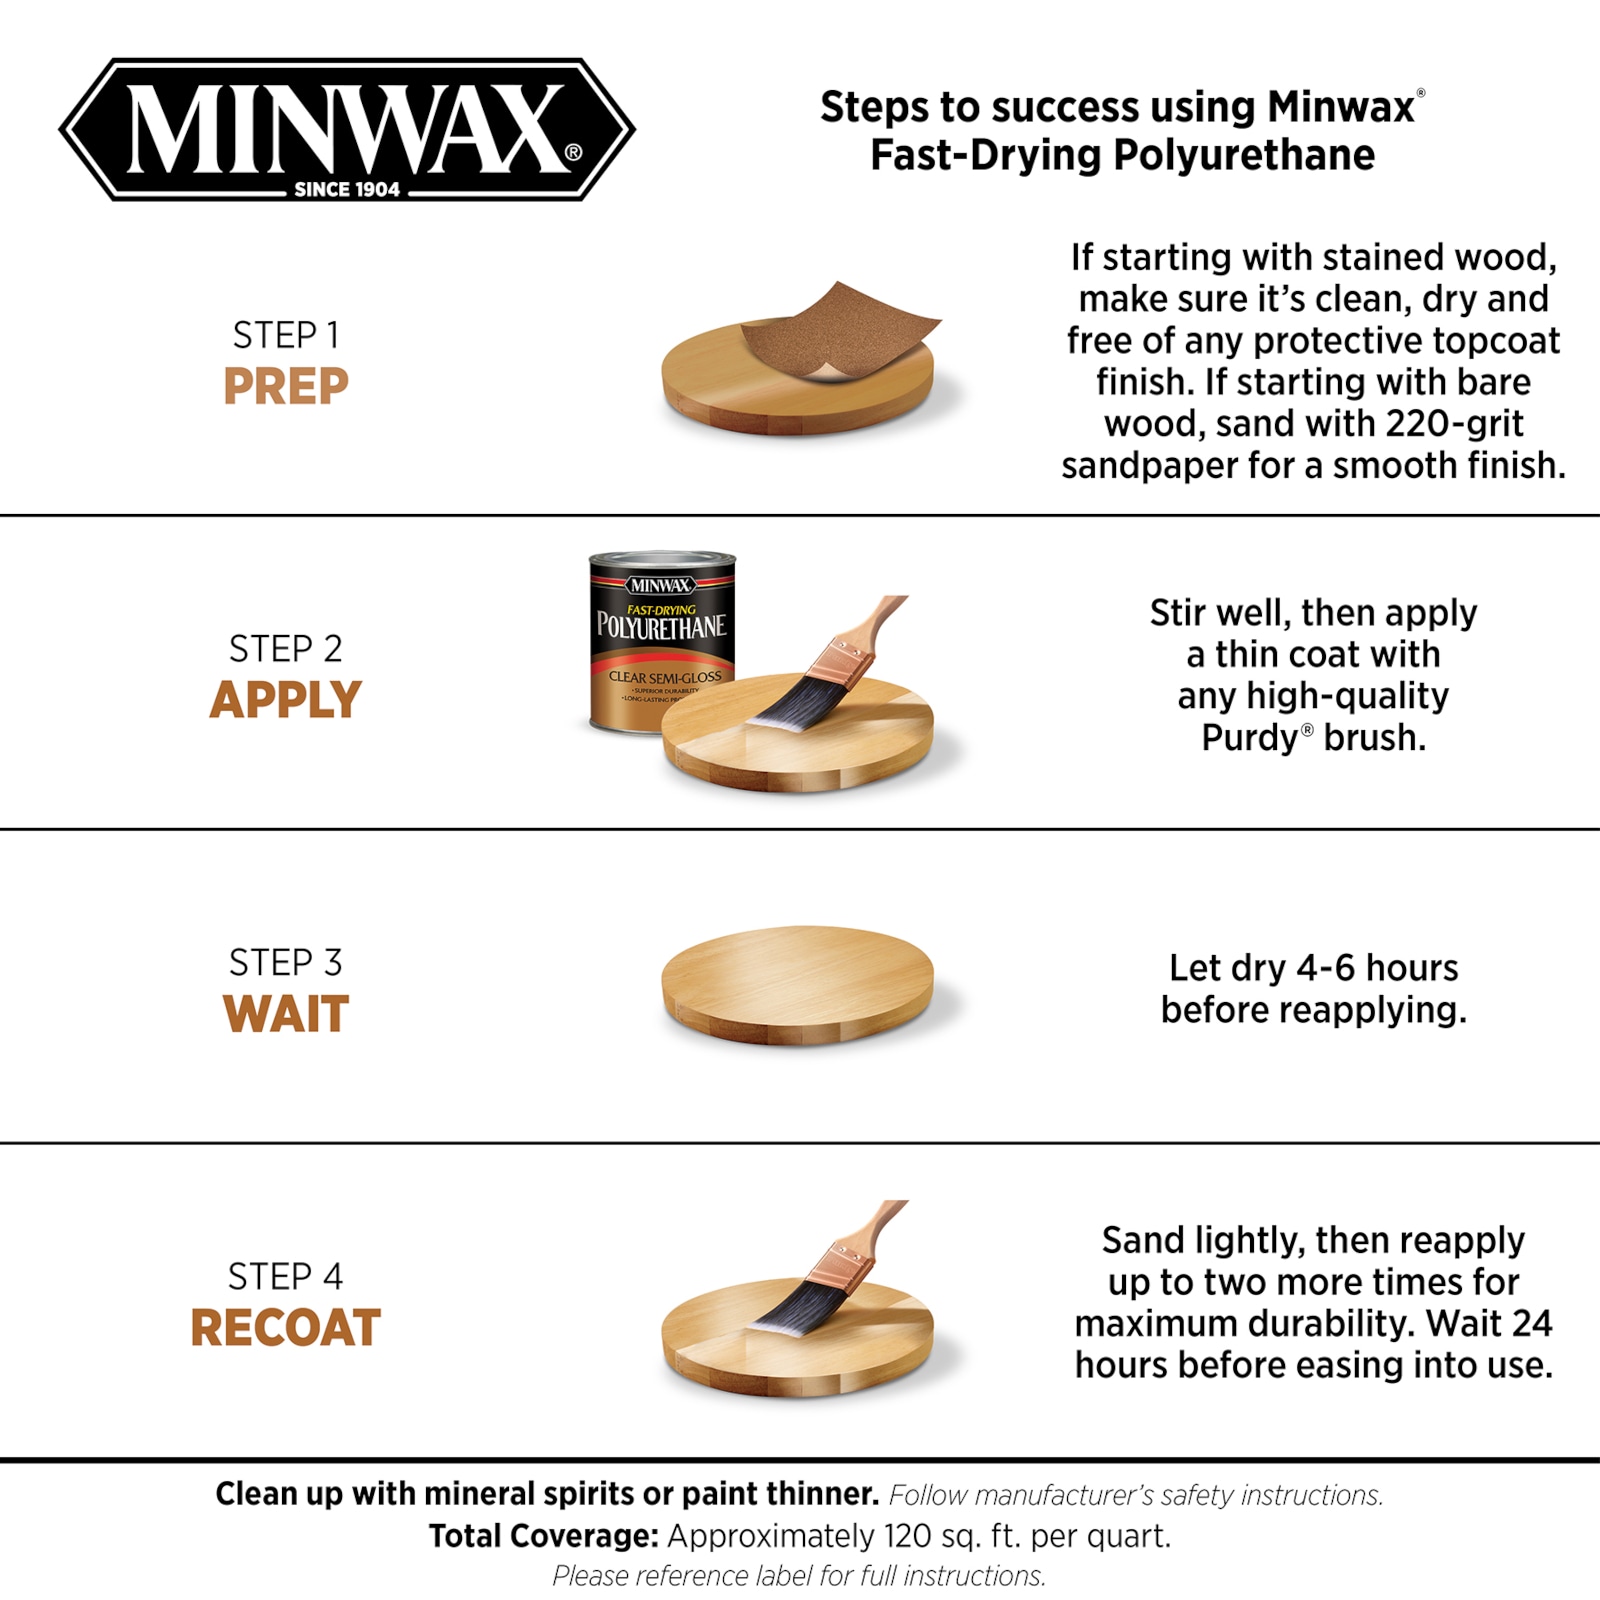 Minwax 63000 Fast Drying Polyurethane Clear Gloss, Quart